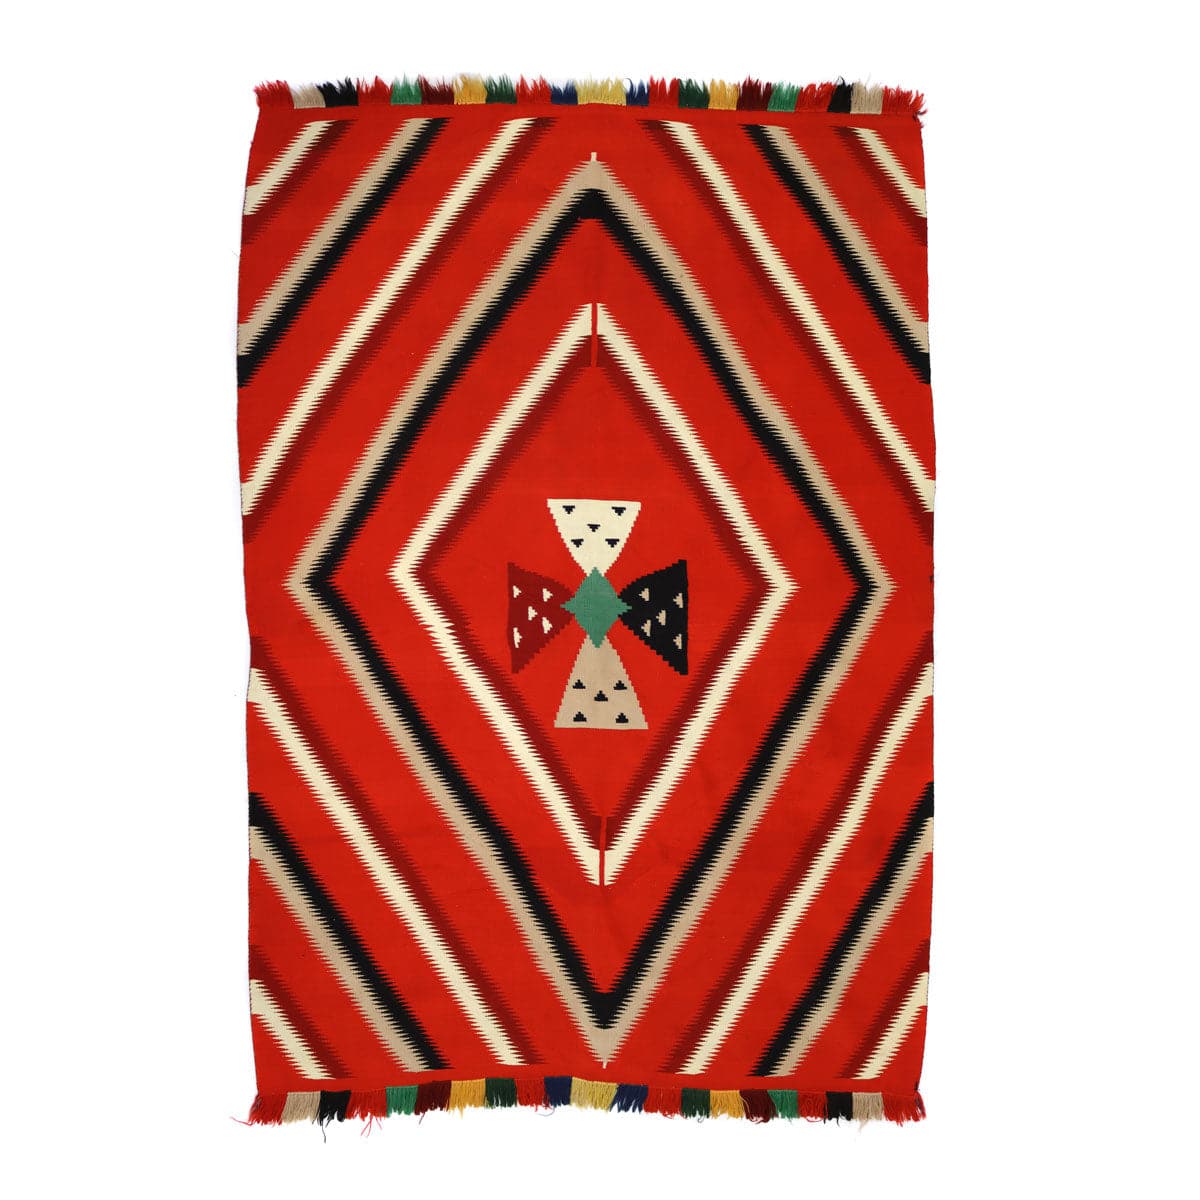 Navajo Germantown Blanket with Four Directions Cross Design c. 1890s, 84" x 60.5" (T92336-0821-003)2